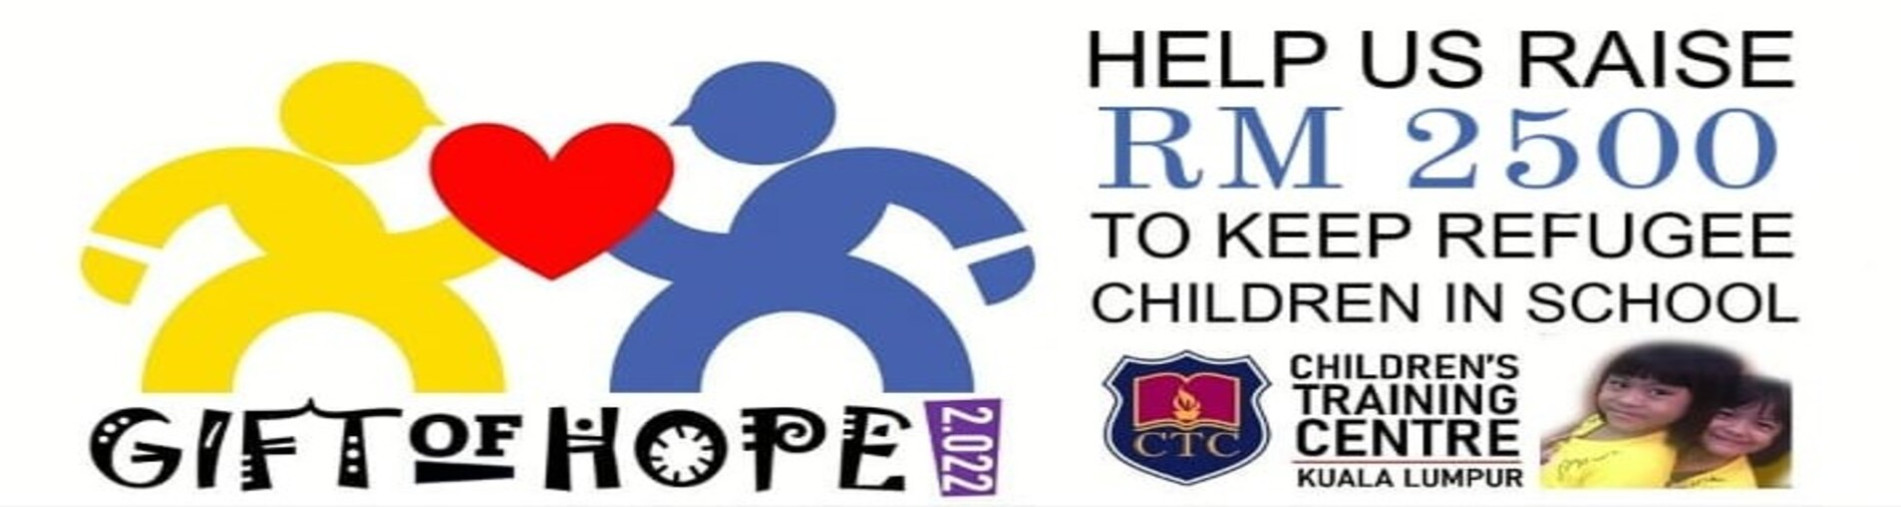 Fundraising For Children's Training Centre (CTC)